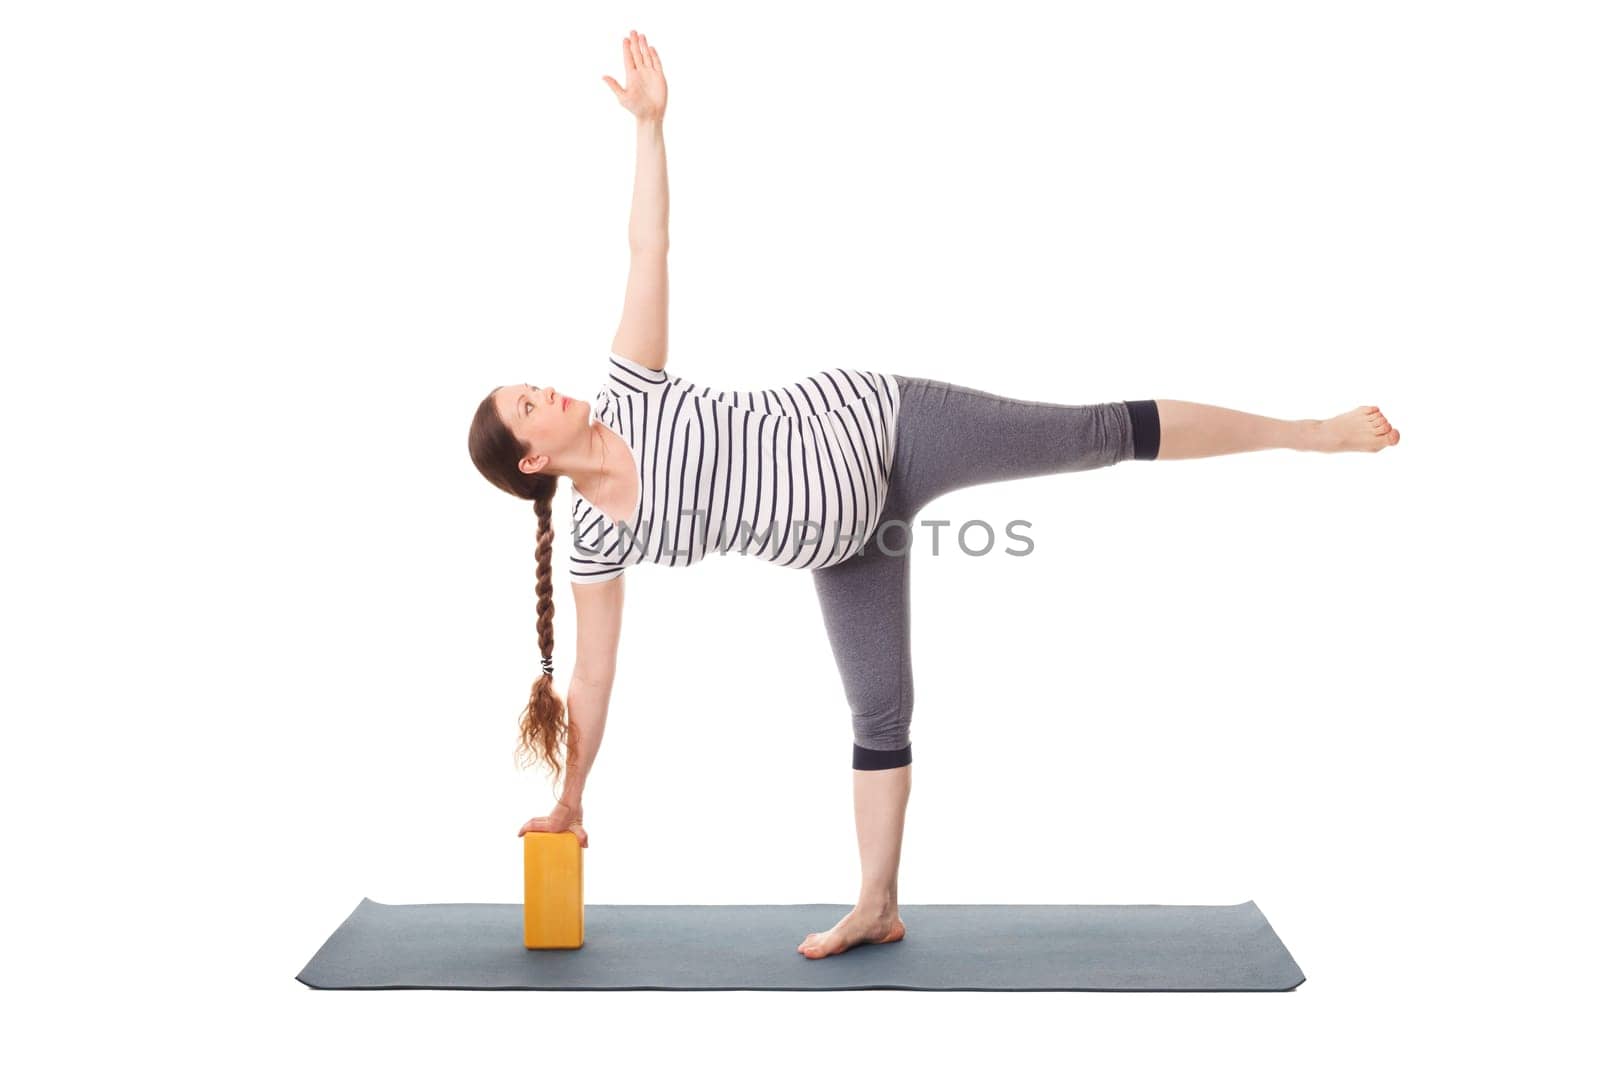 Pregnancy yoga exercise - pregnant woman doing asana virabhadrasana 3 - warrior pose variation with wooden block isolated on white background